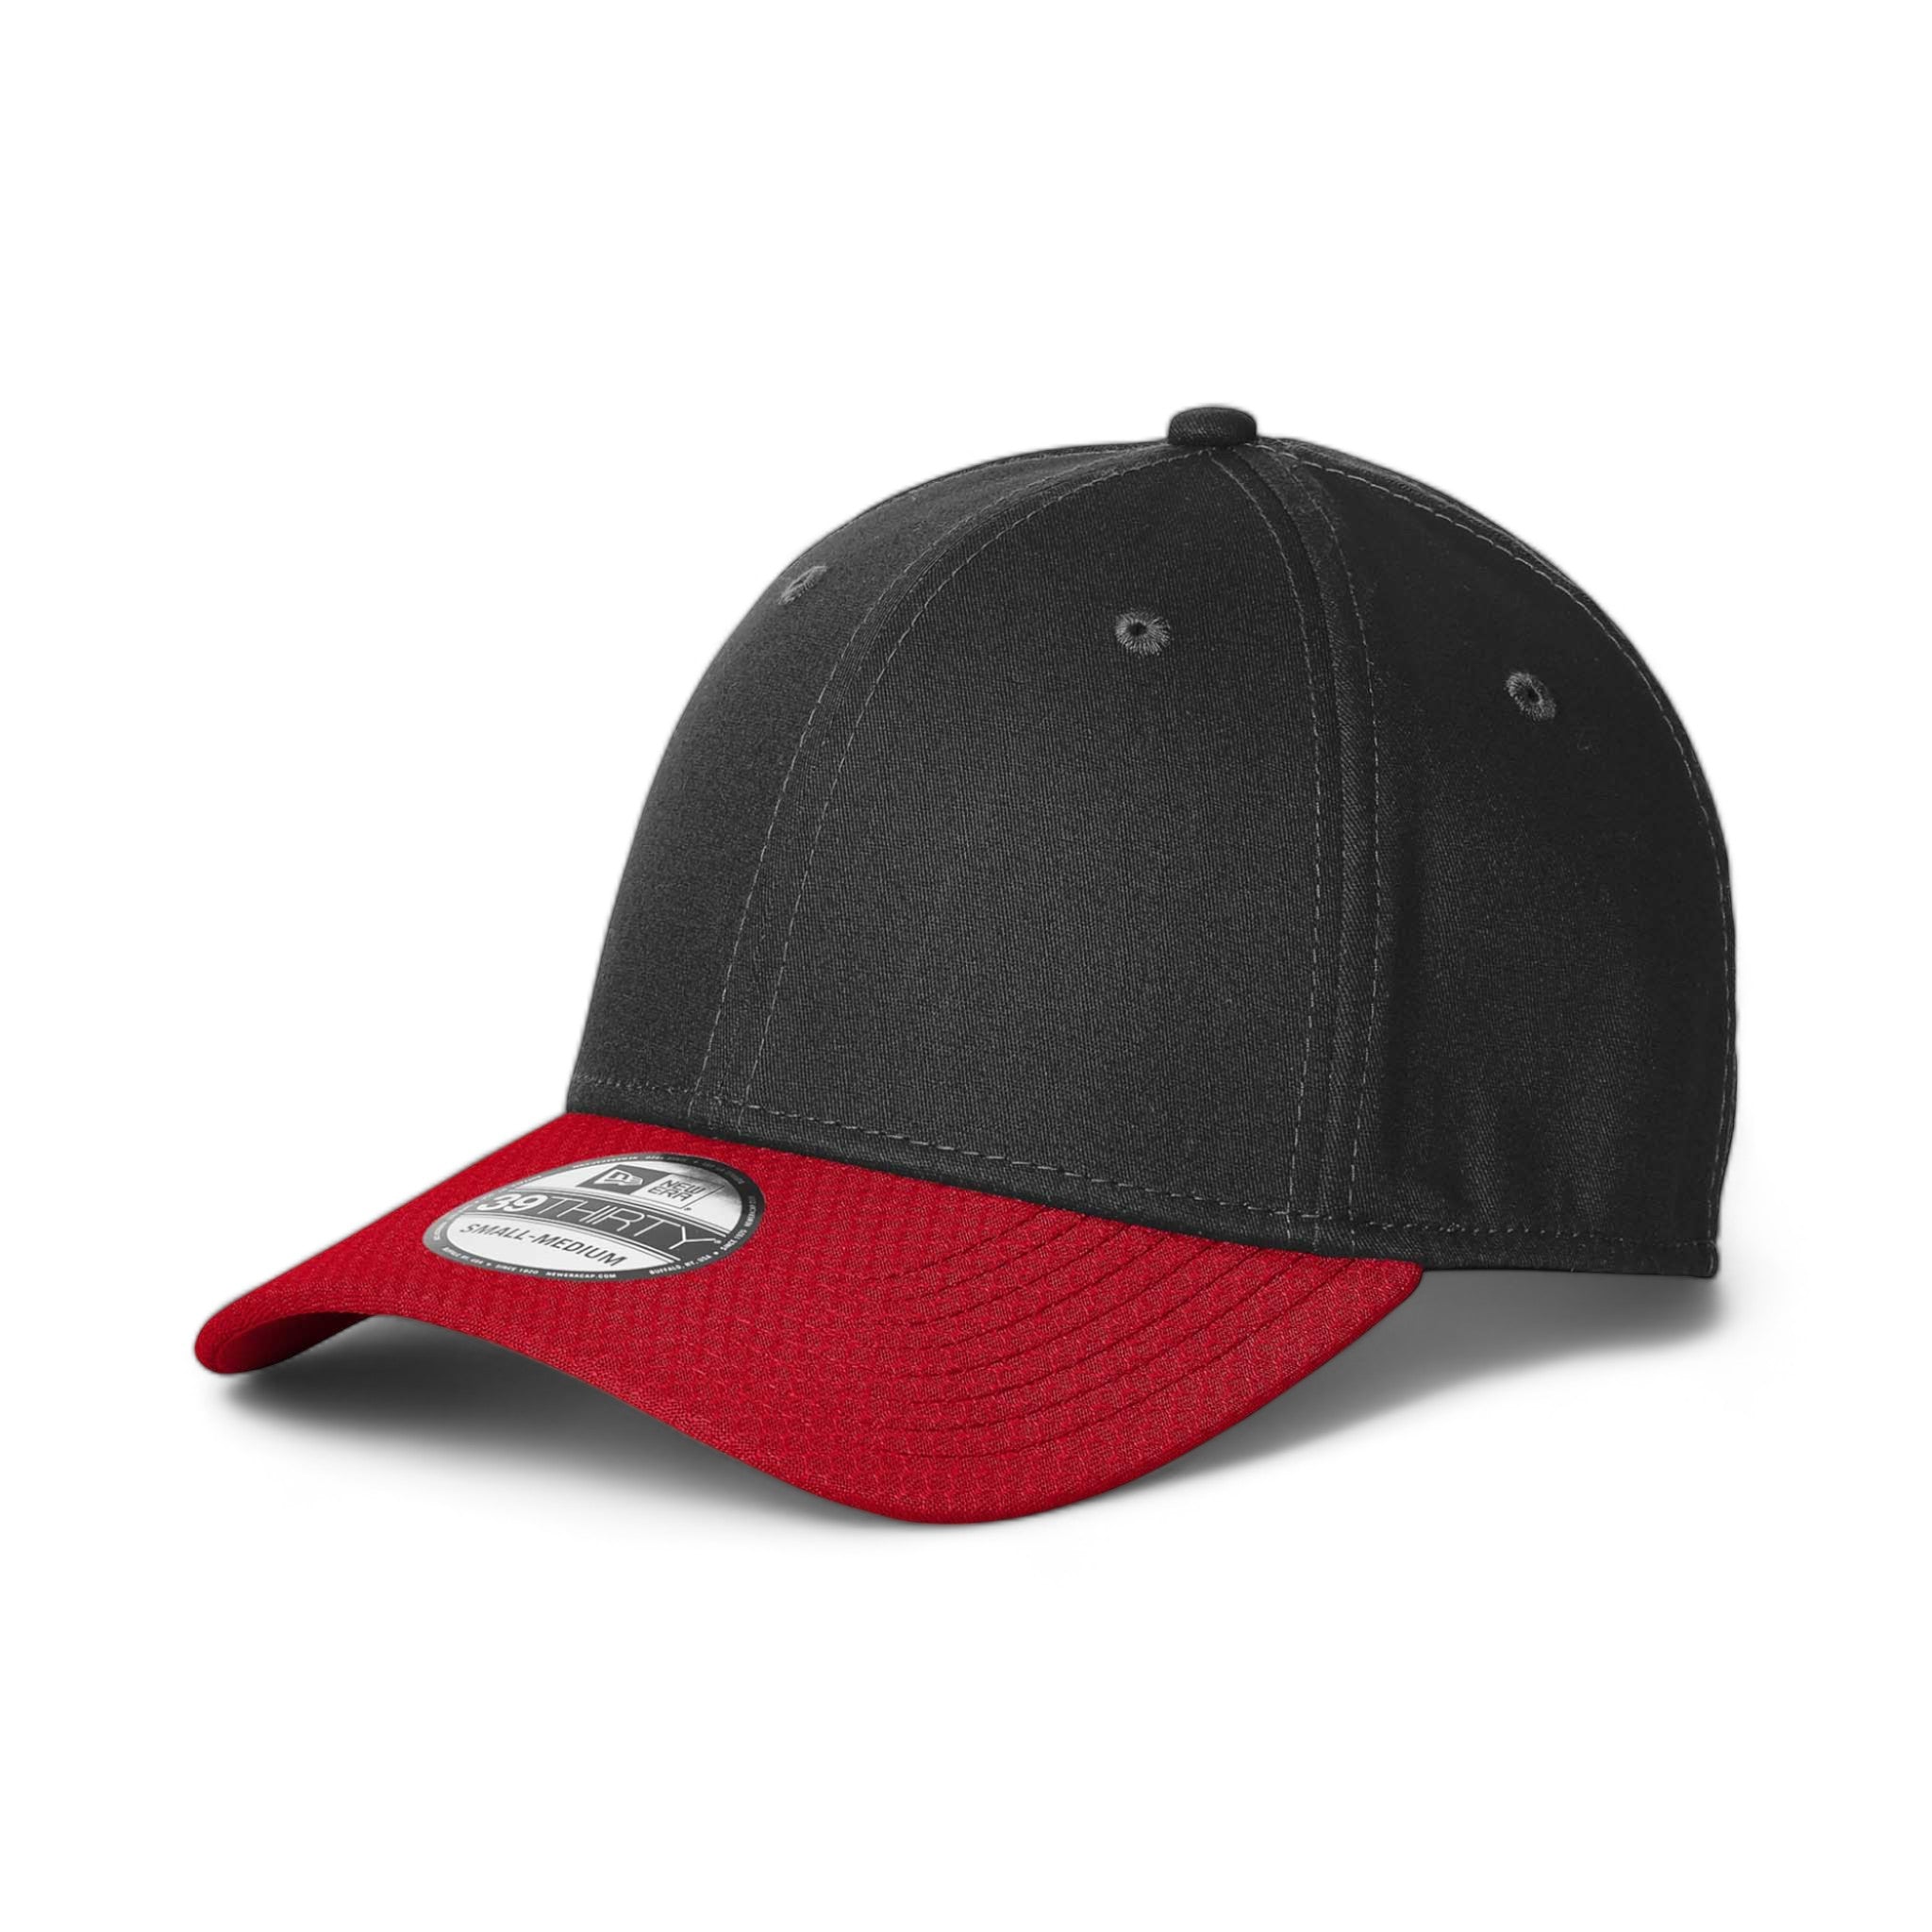 Side view of New Era NE1122 custom hat in black and scarlet